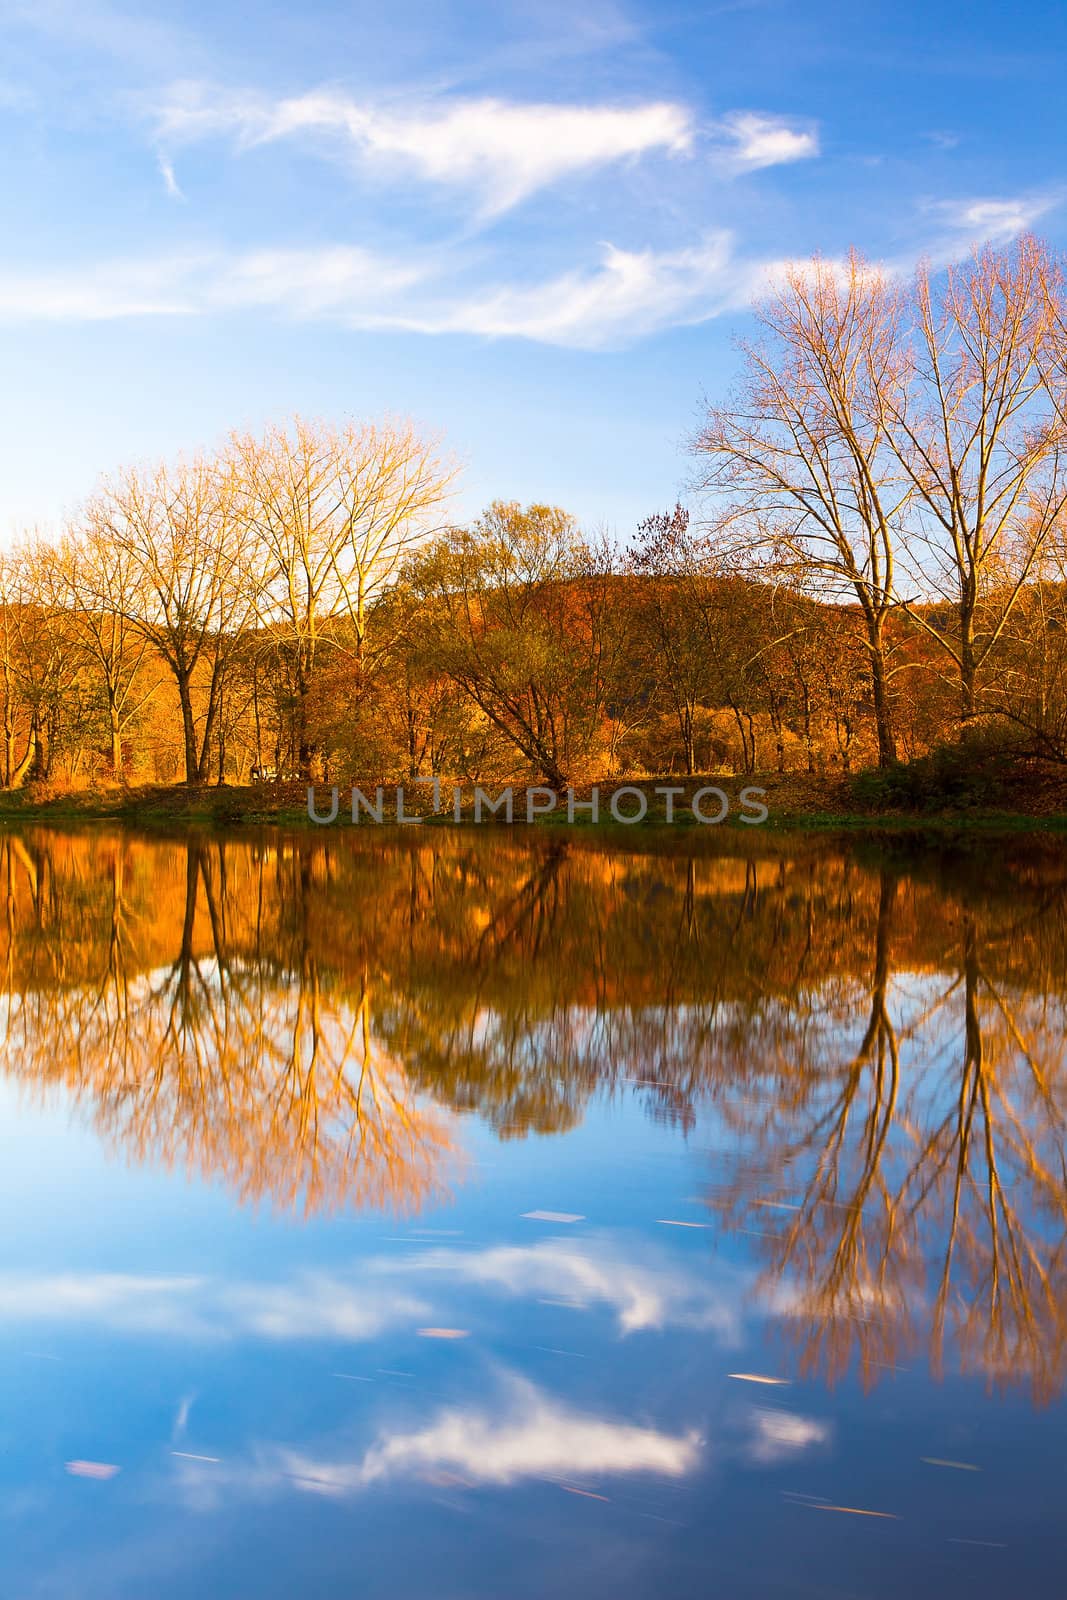 Reflection on the Berounka river in autumn at sunrise